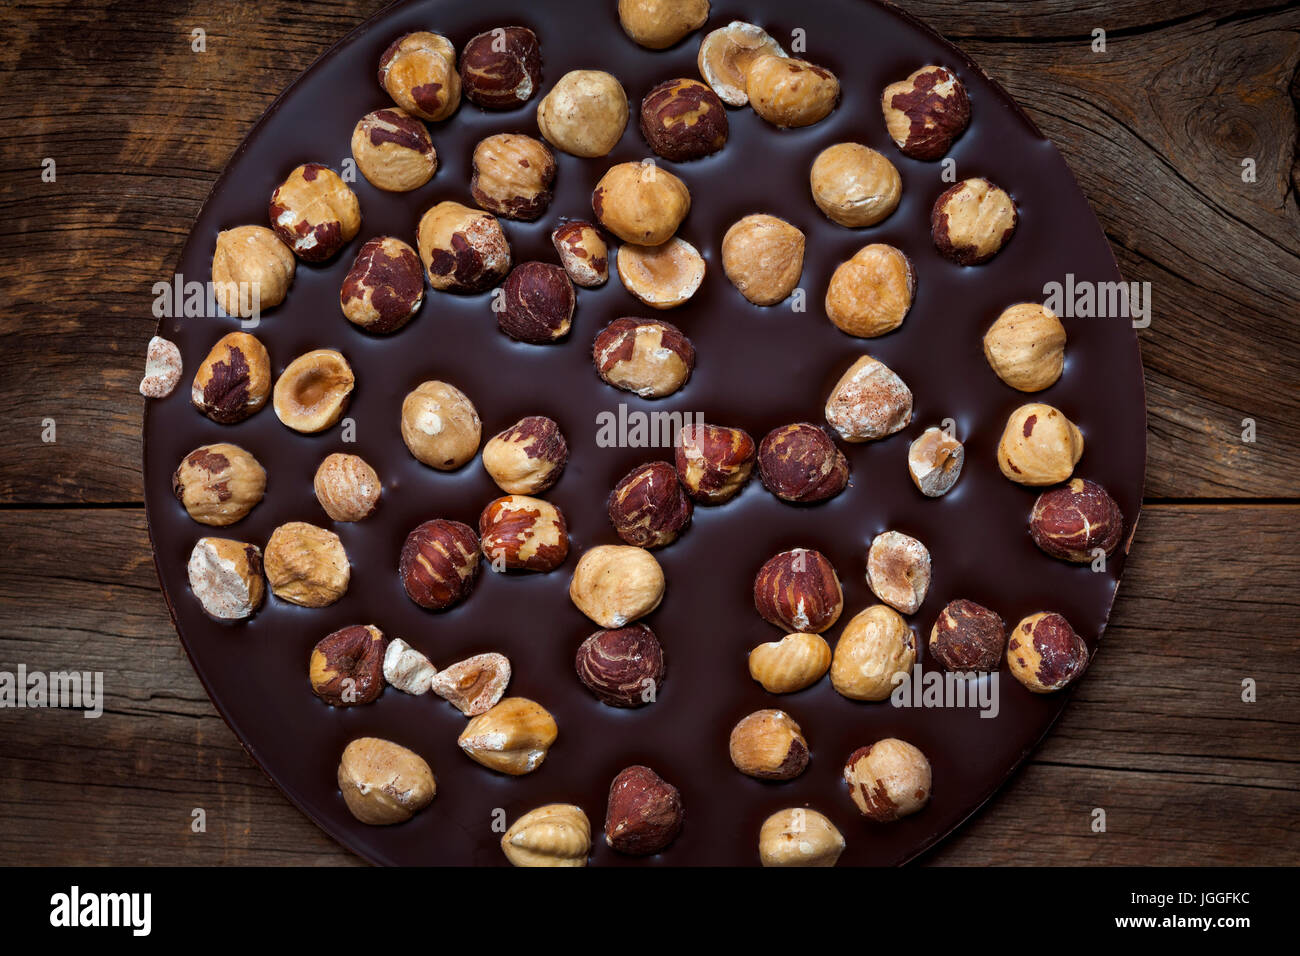 Barra redonda de chocolate artesanal con avellanas enteras sobre fondo de madera rústica, vista superior Foto de stock